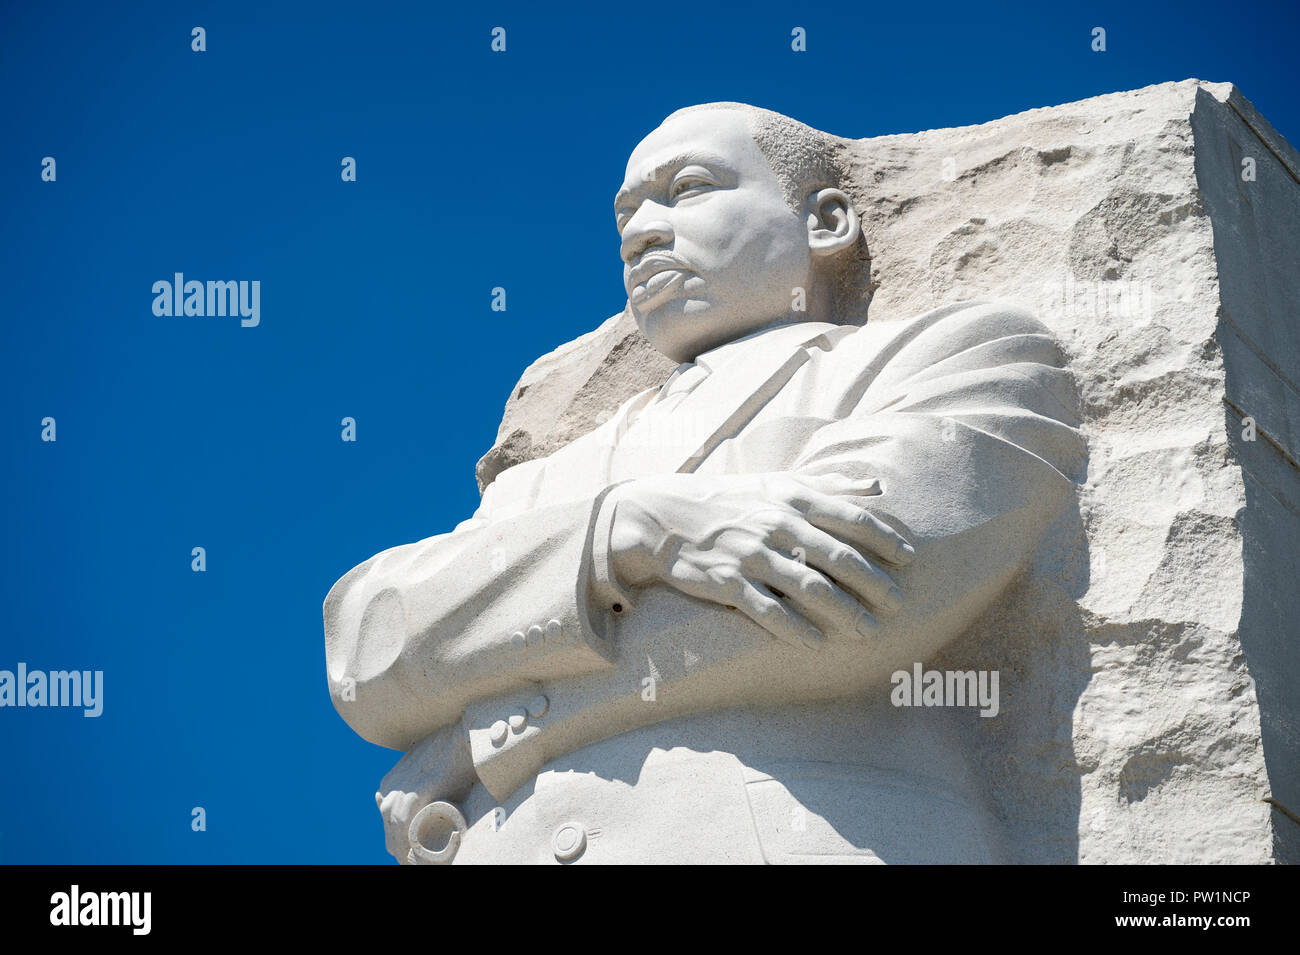 WASHINGTON DC - Agosto 26, 2018: il Martin Luther King Jr National Memorial sorge sotto il luminoso cielo blu Foto Stock